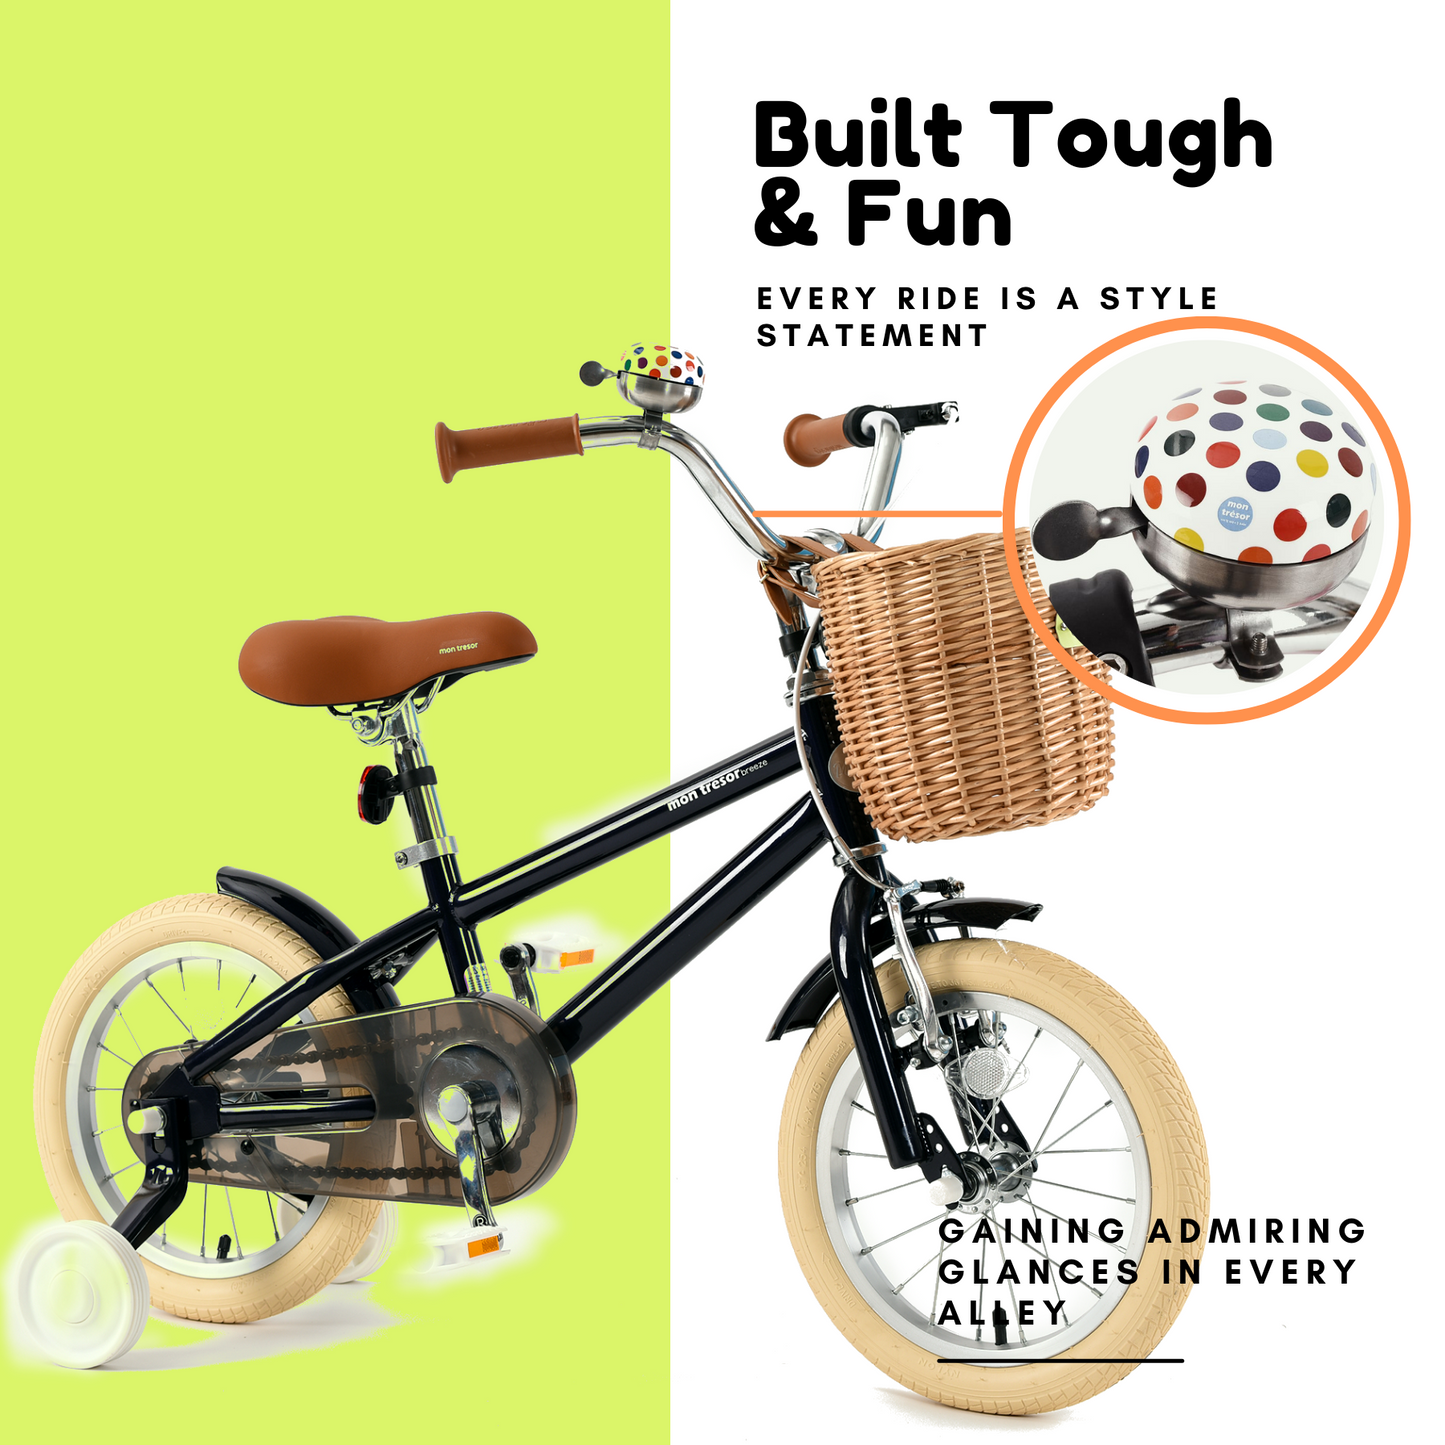 Montresor Kids Bike with Removable Training Wheels, Basket